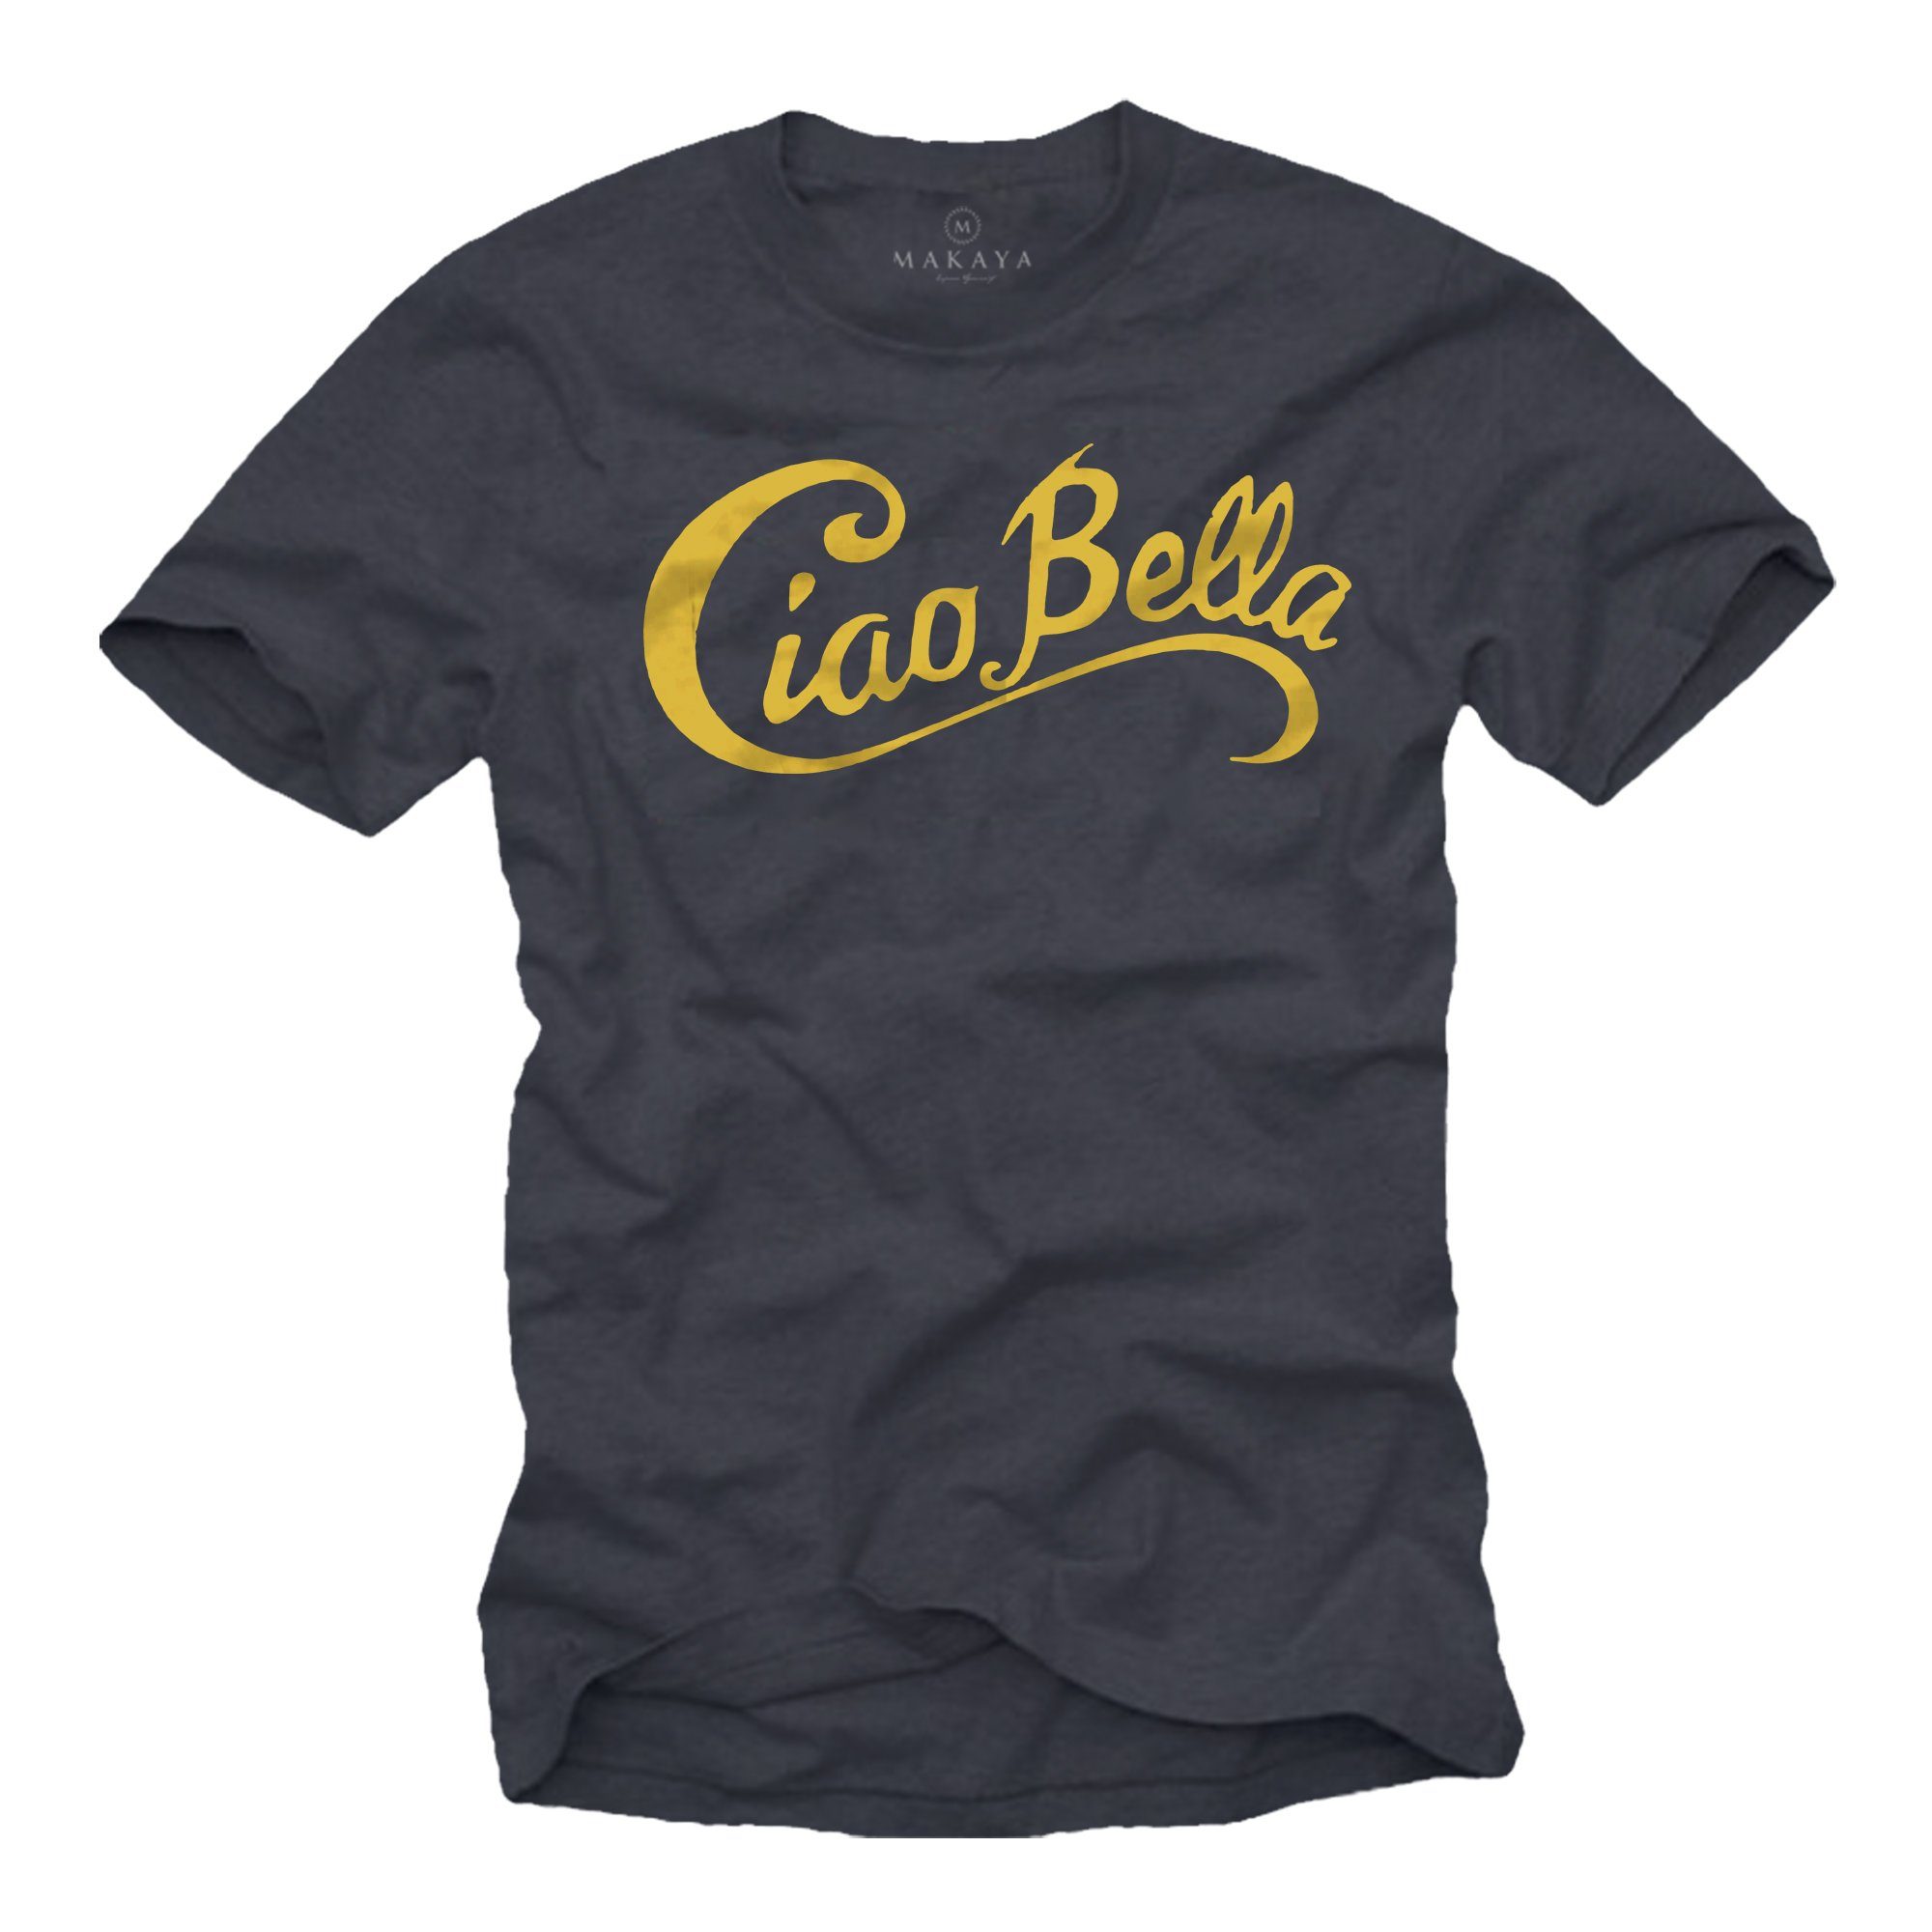 MAKAYA Print-Shirt Herren Italienischer Spruch Ciao Bella Coole Mode Italien Style Logo, Motiv